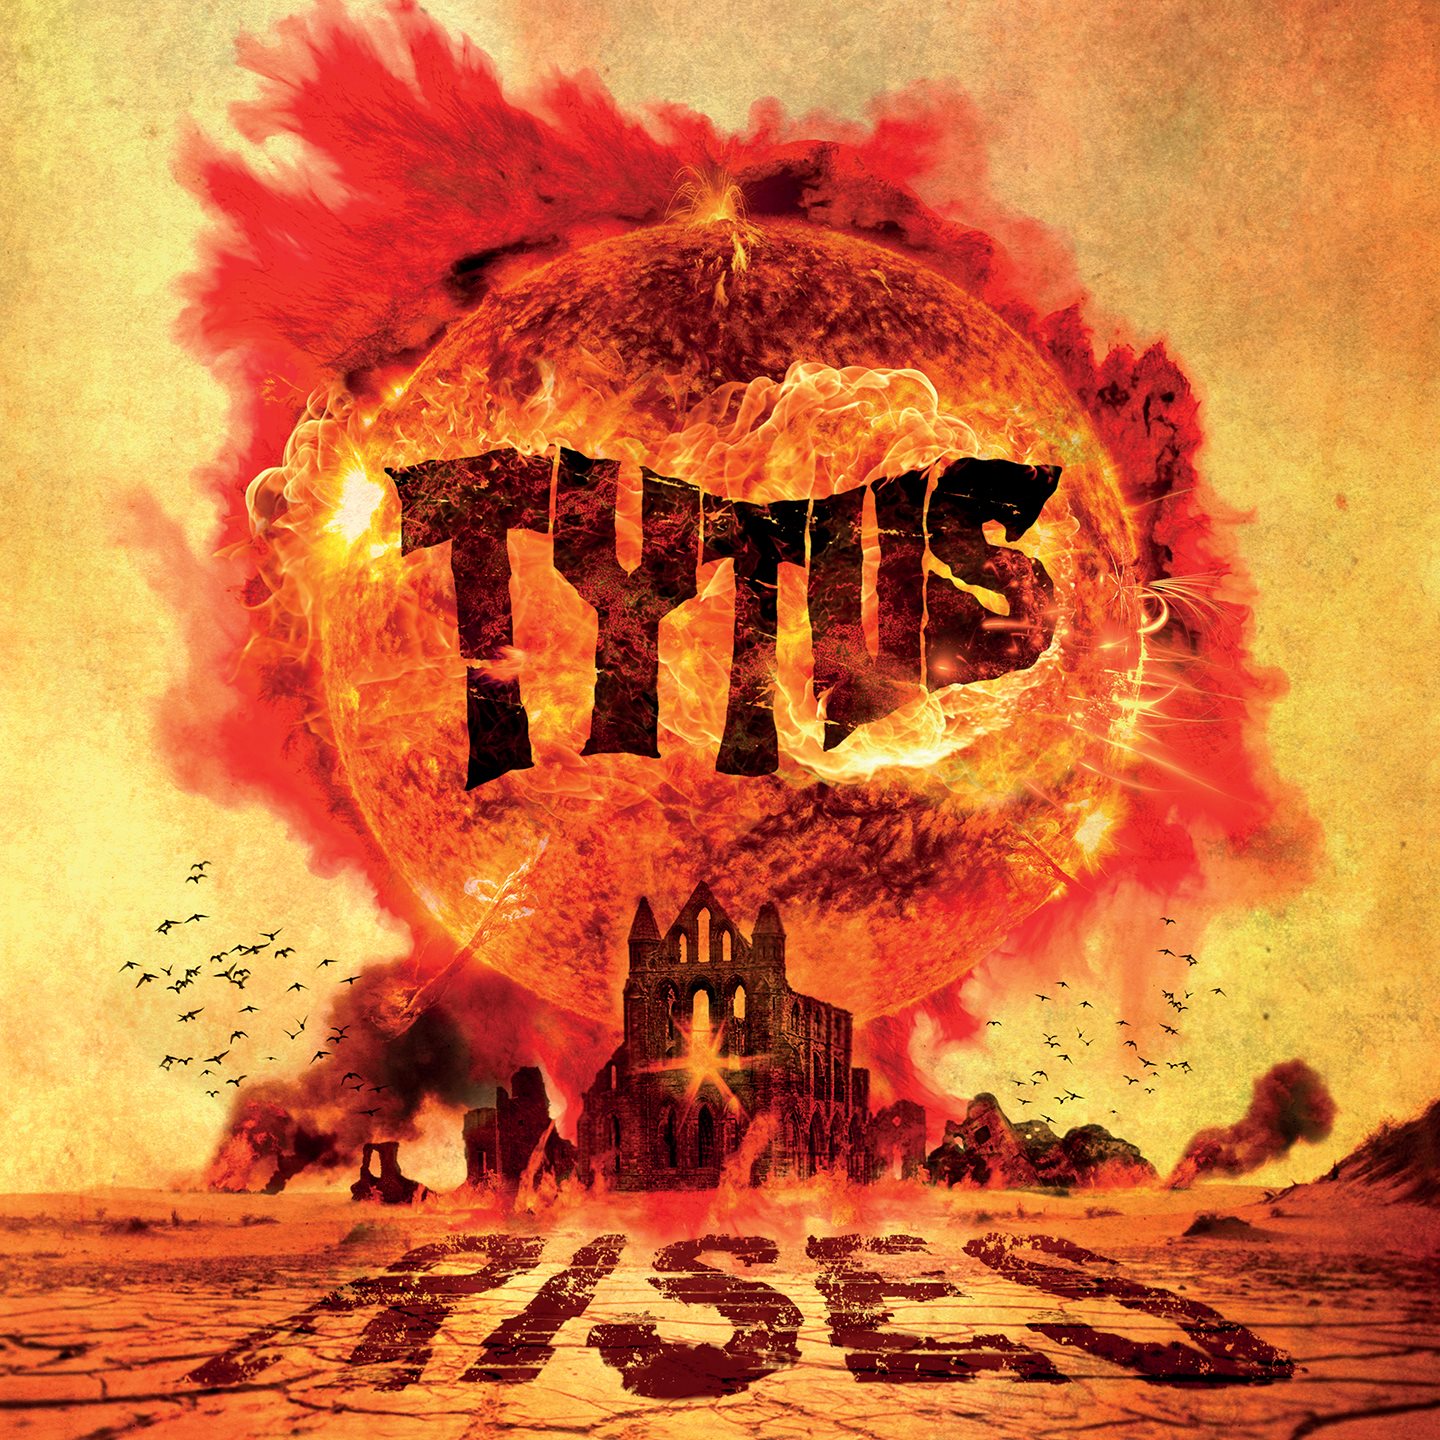 Tytus, 'Rises', Sliptrick Records (2016), artwork by Conny Ochs